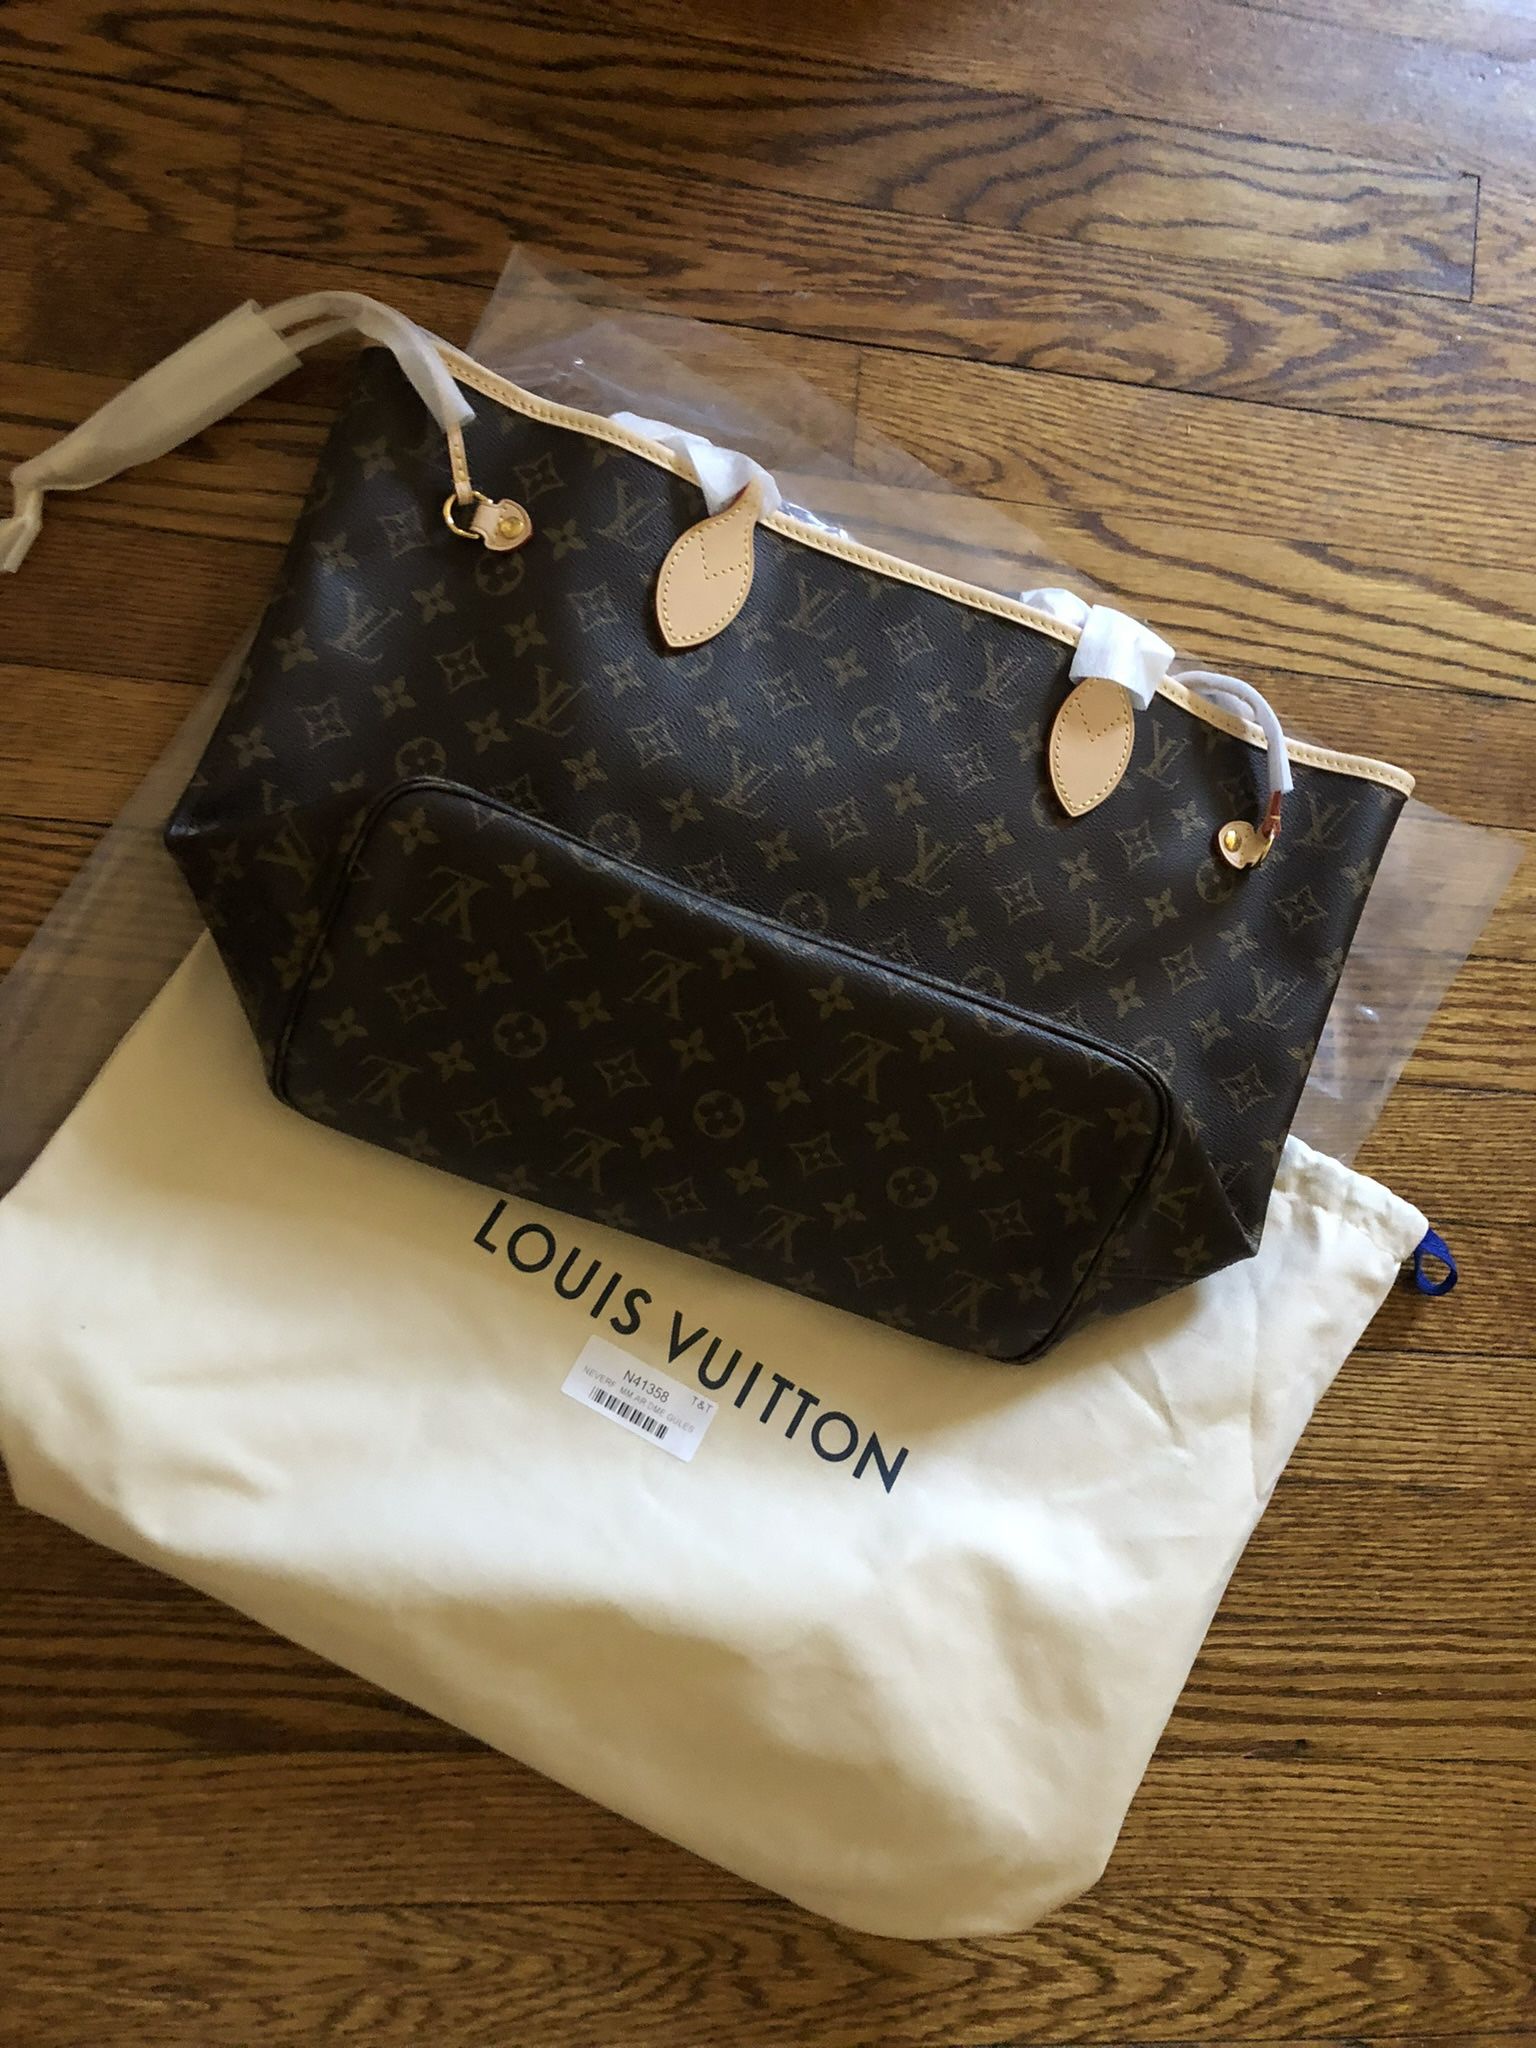 Pre-owned Authentic Louis Vuitton Ellipse PM Monogram Handbag for Sale in  Sunnyvale, CA - OfferUp